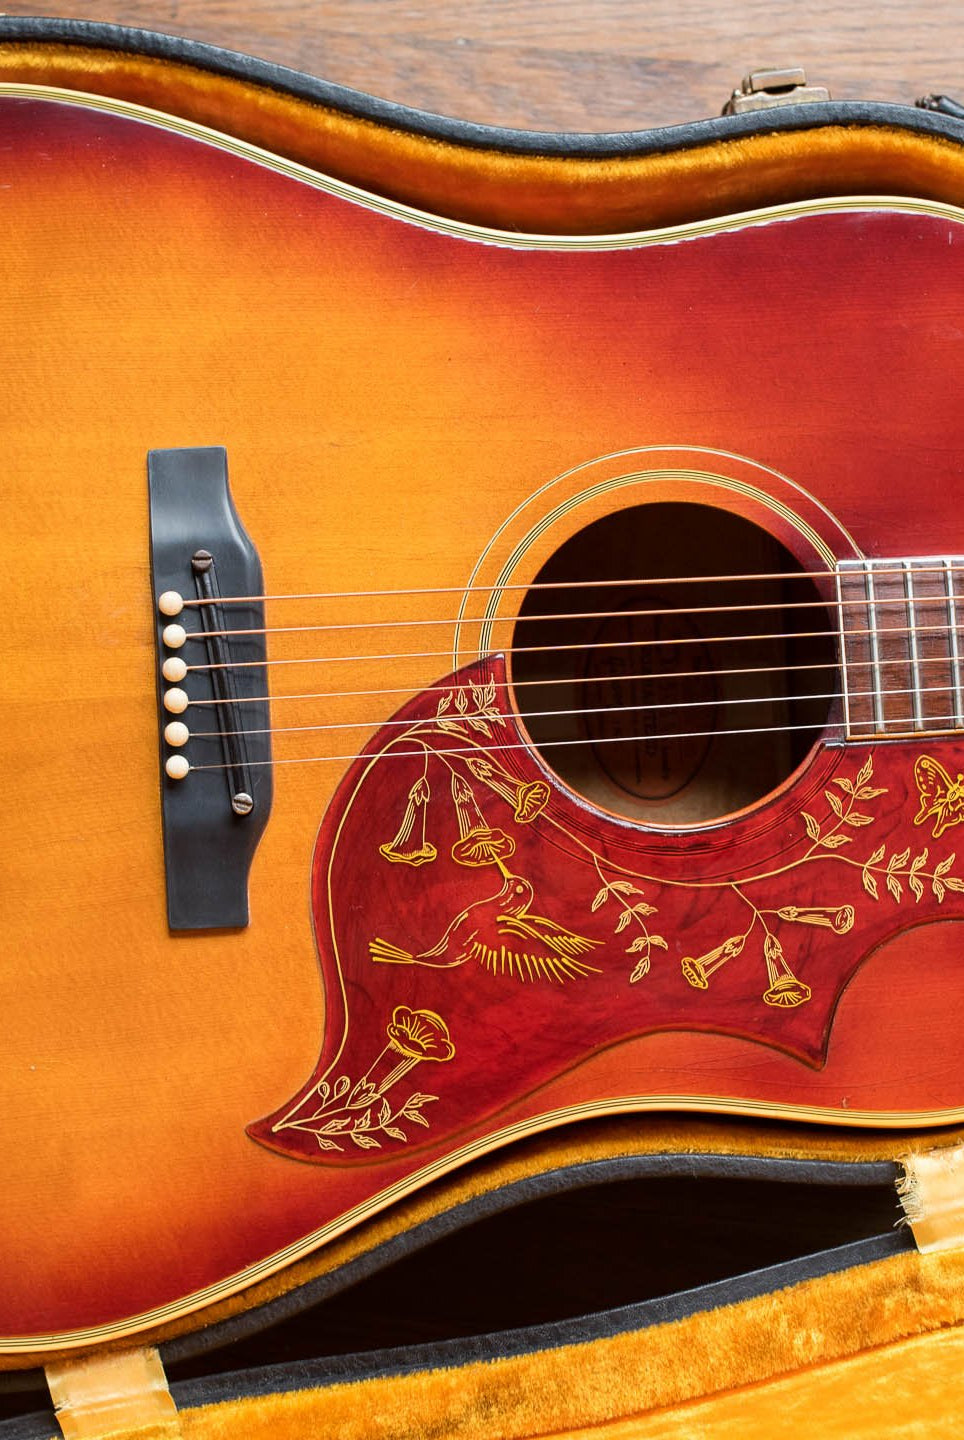 Vintage 1963 Gibson Hummingbird guitar